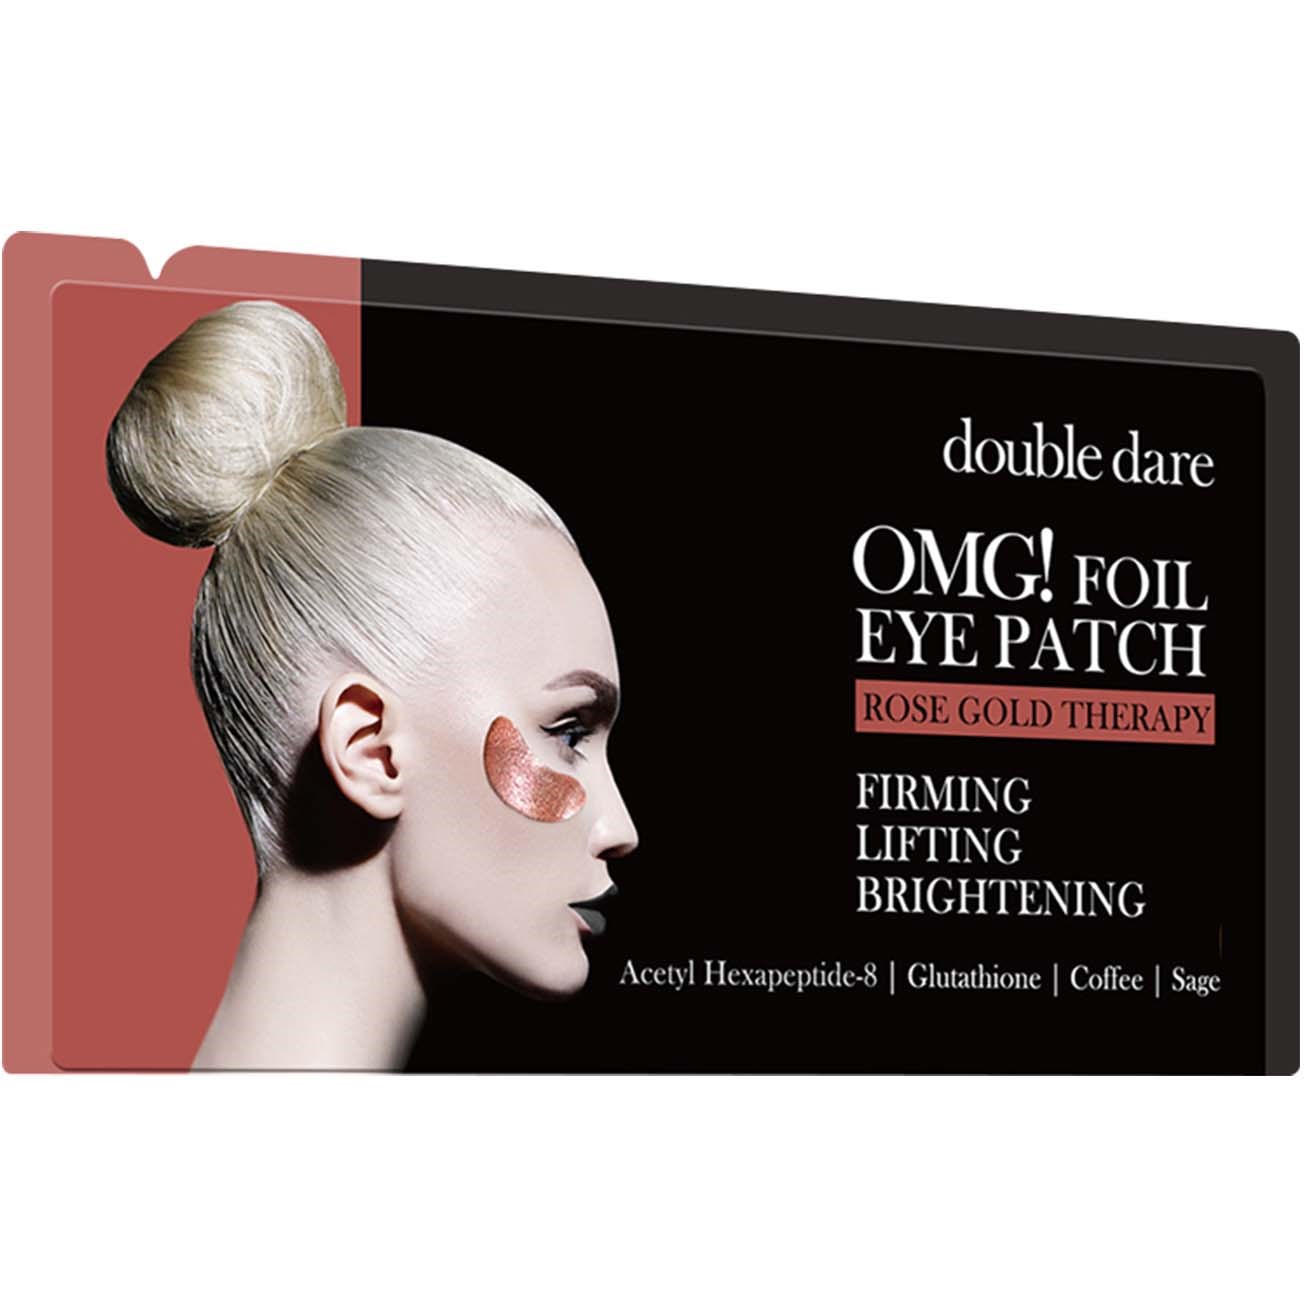 Bilde av Omg! Double Dare Foil Eye Patch Rose Gold Therapy